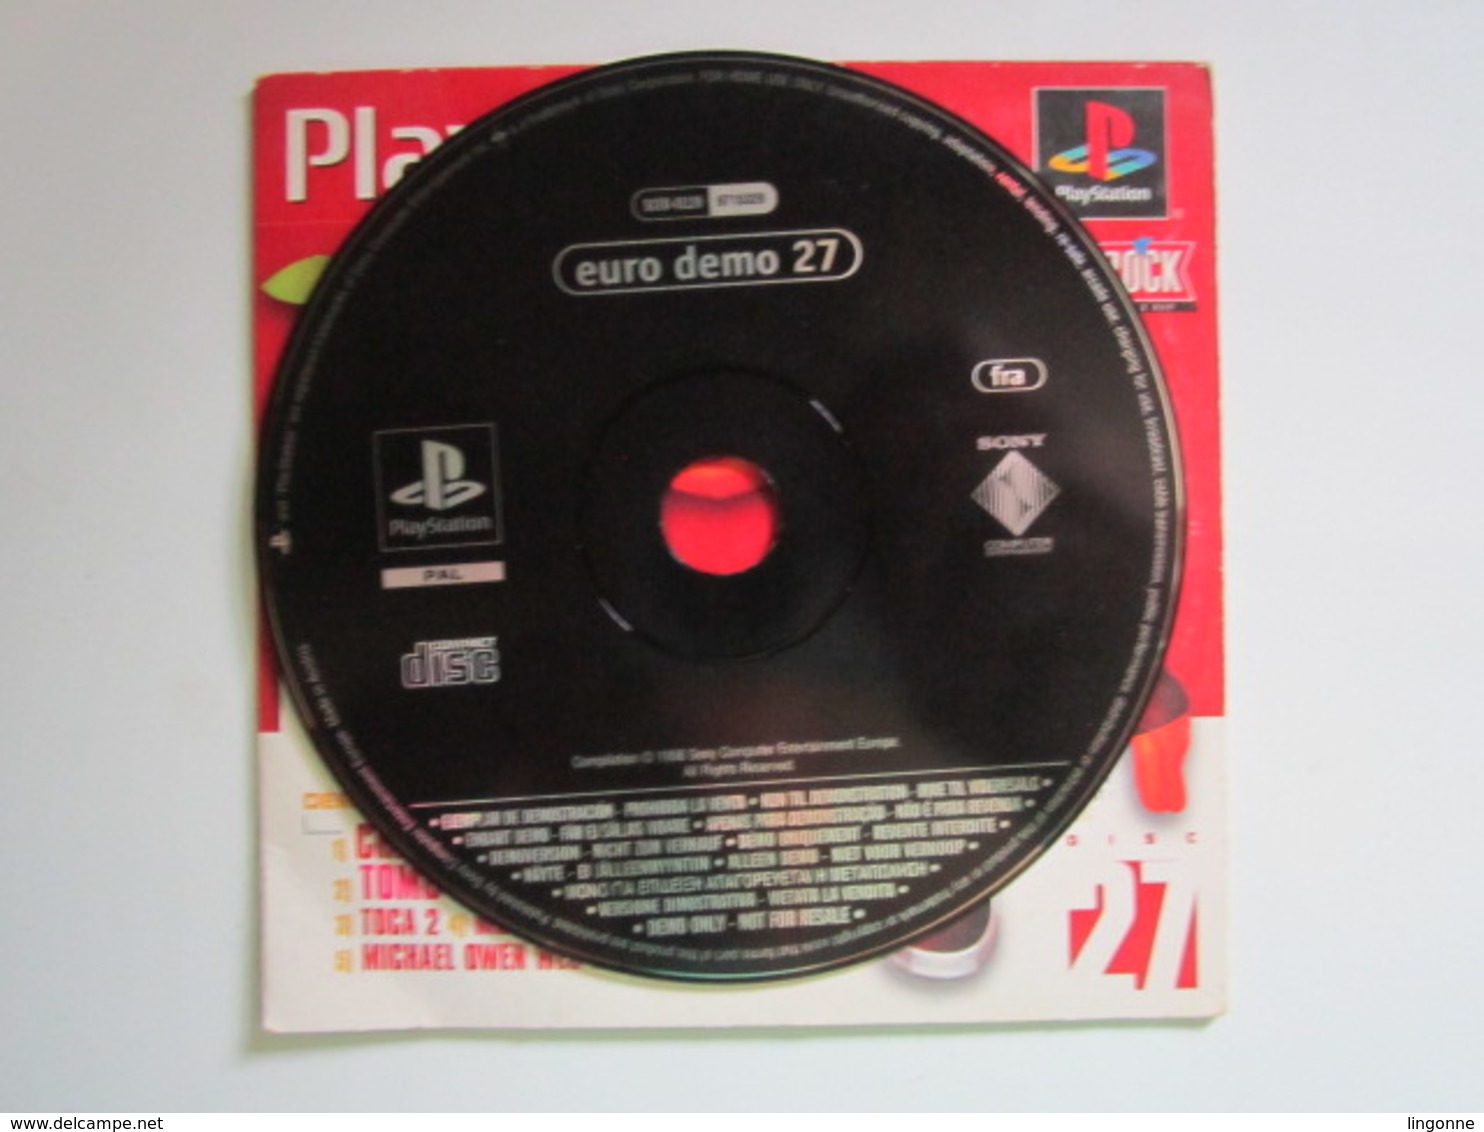 Sony PlayStation DISC 27 - Playstation